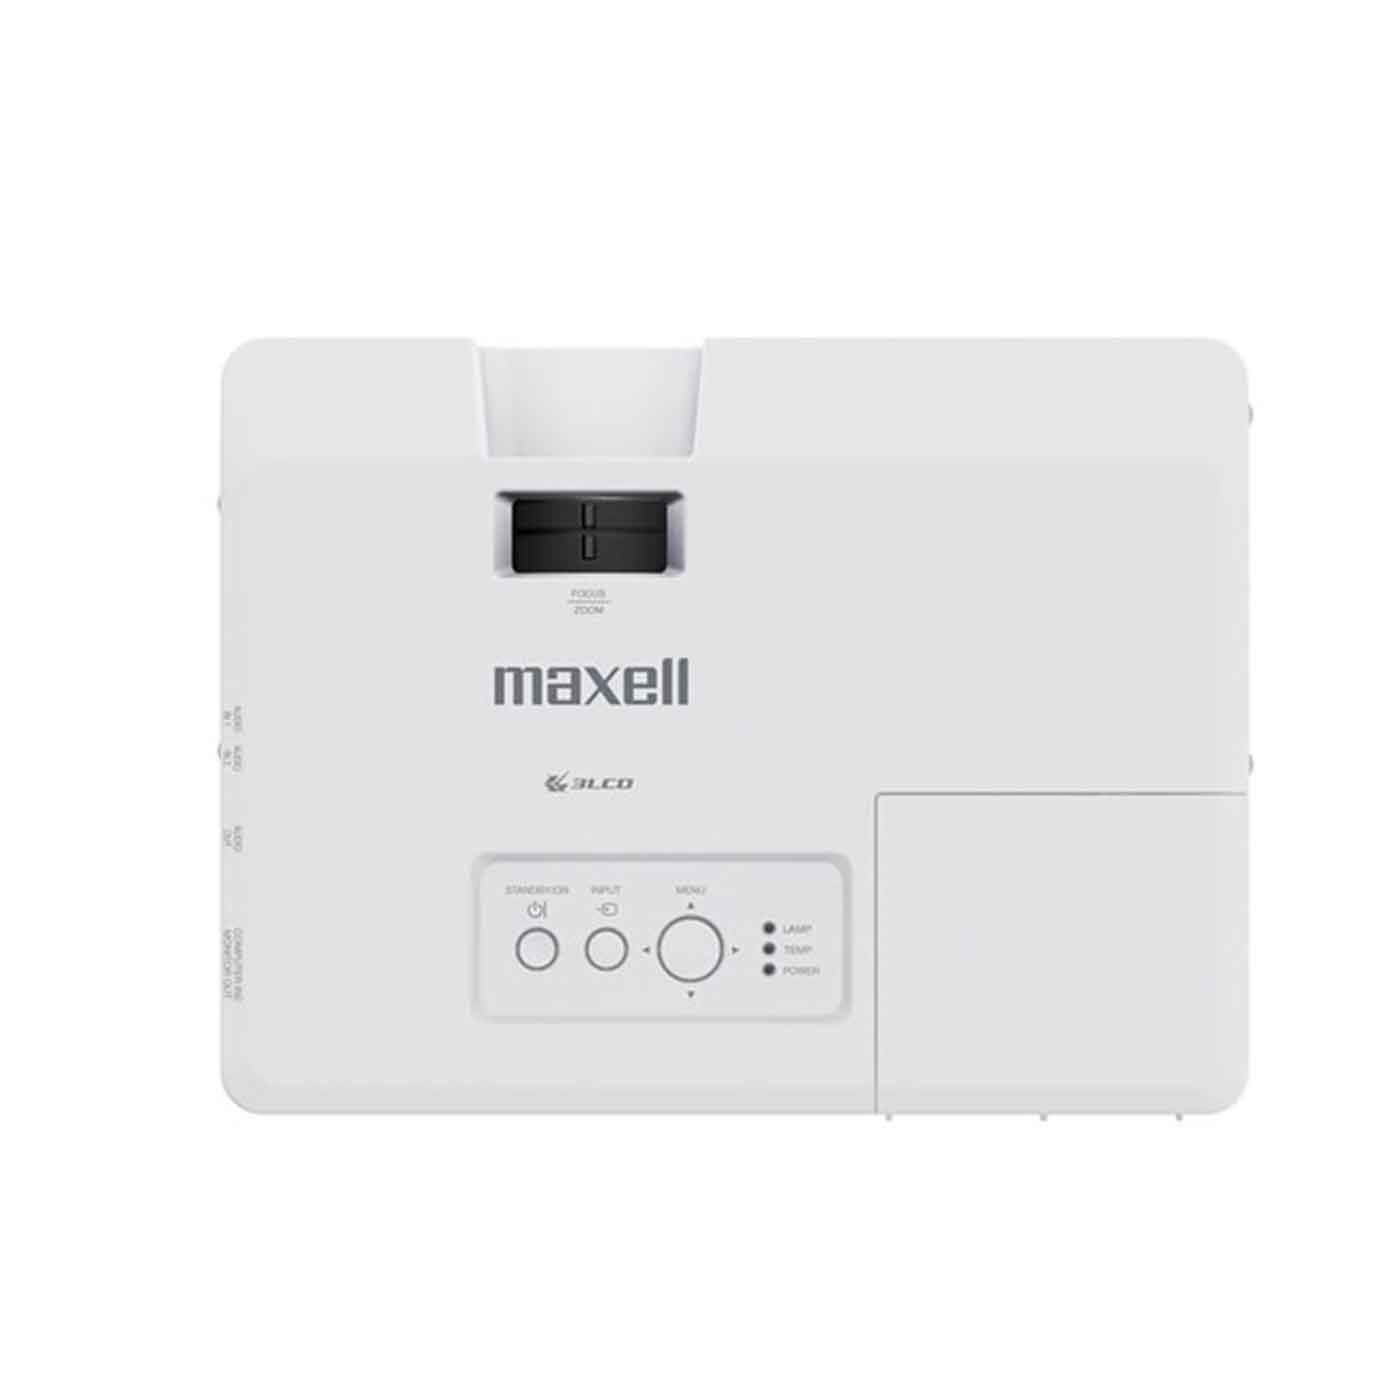 Maxell WXGA Portable Projector 3200 ANSI